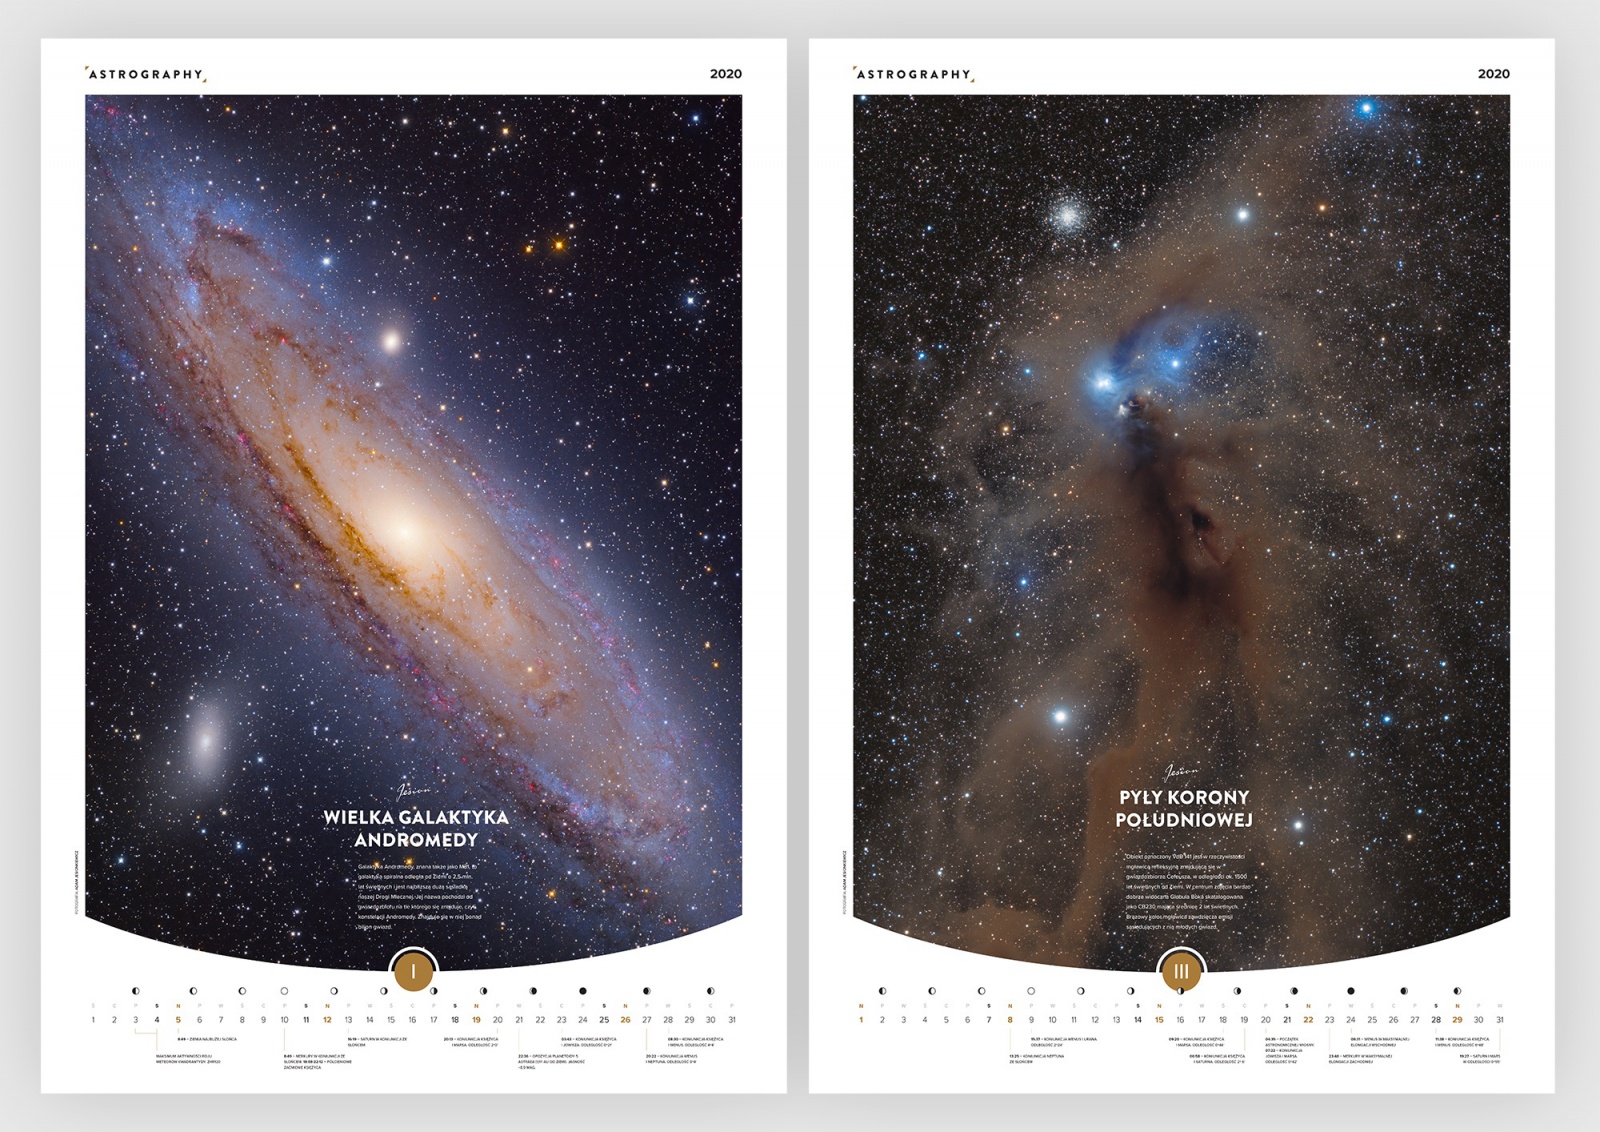 Astrography_Calendar_2020-1.jpg